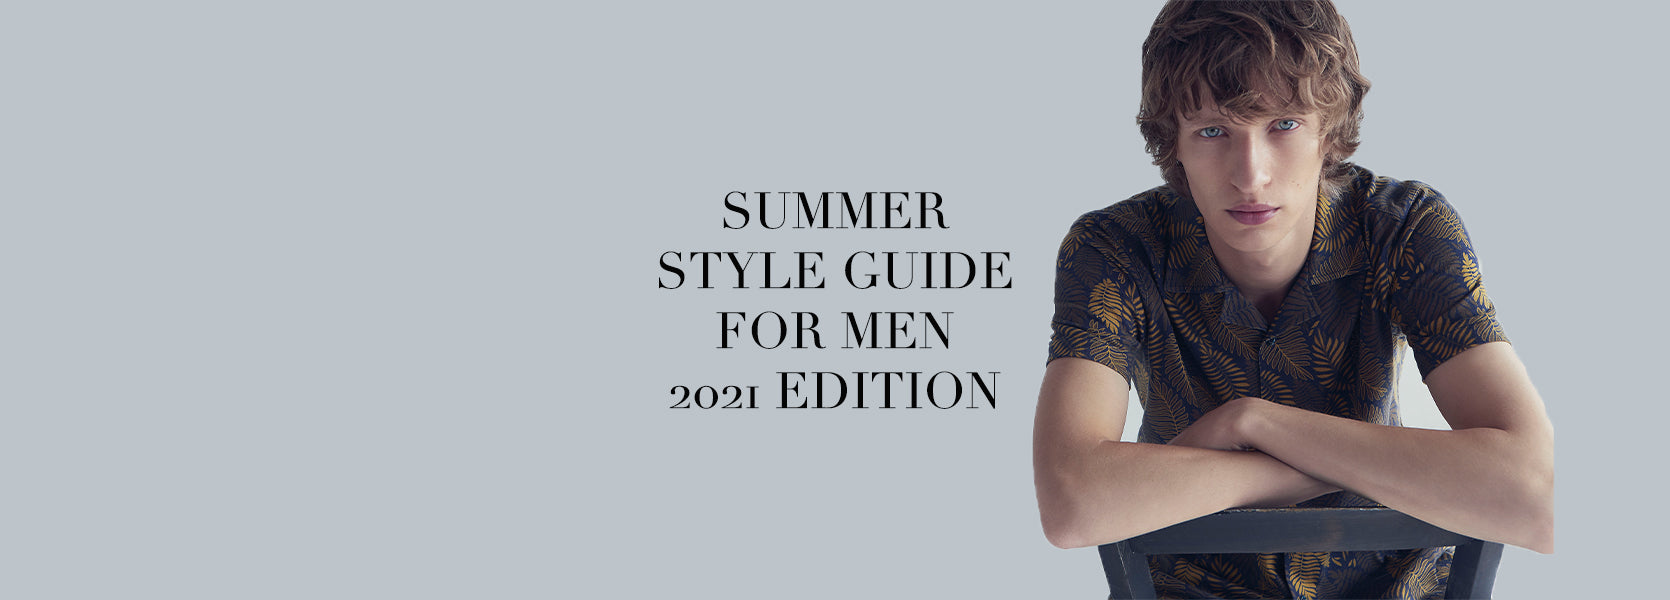 Summer 2021 Style Guide For Men